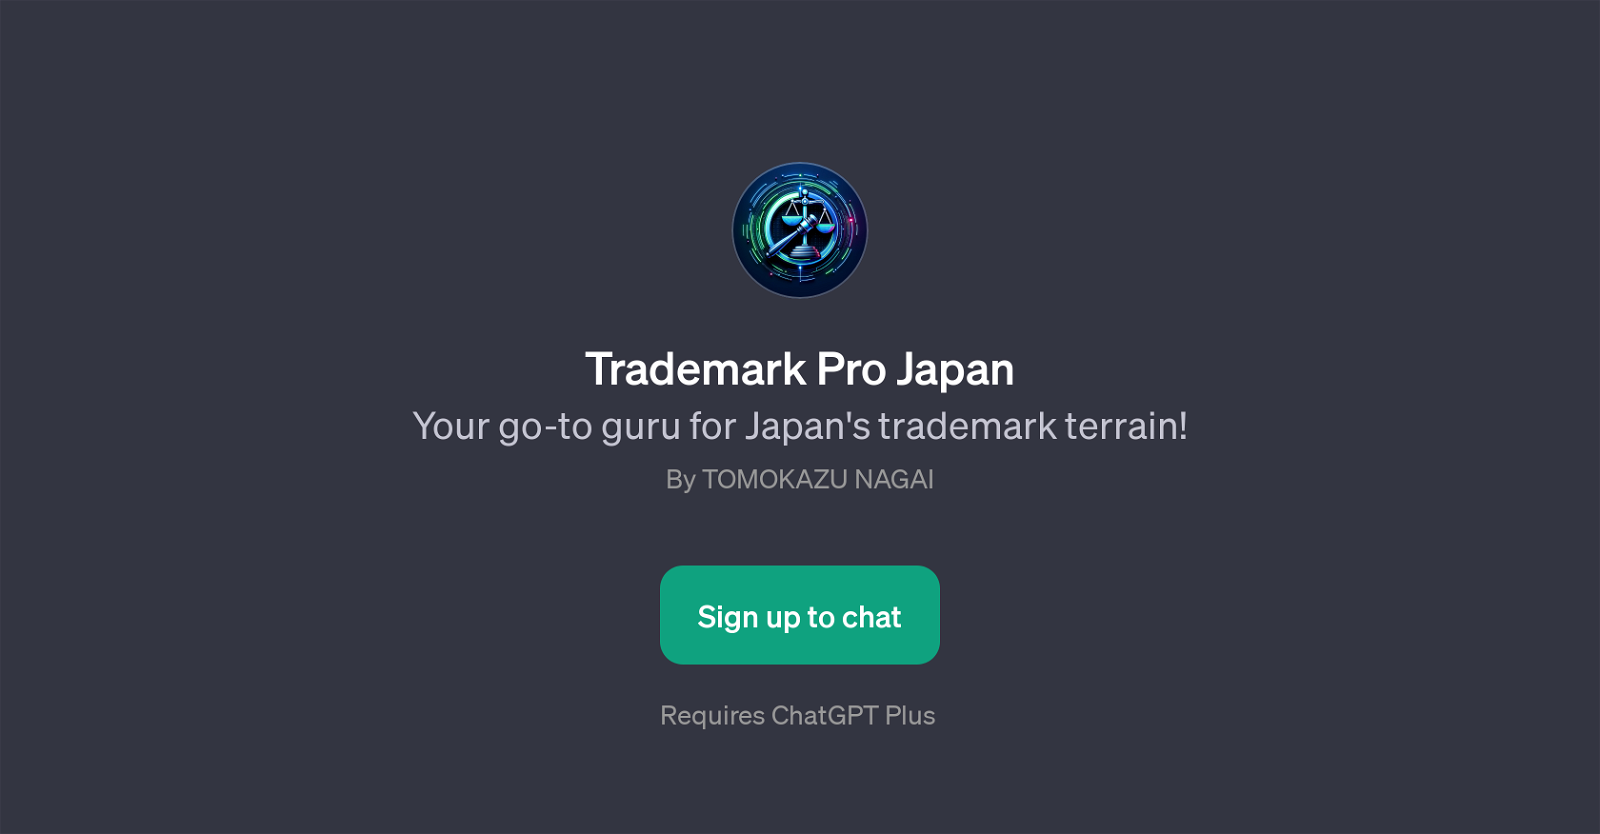 Trademark Pro Japan website